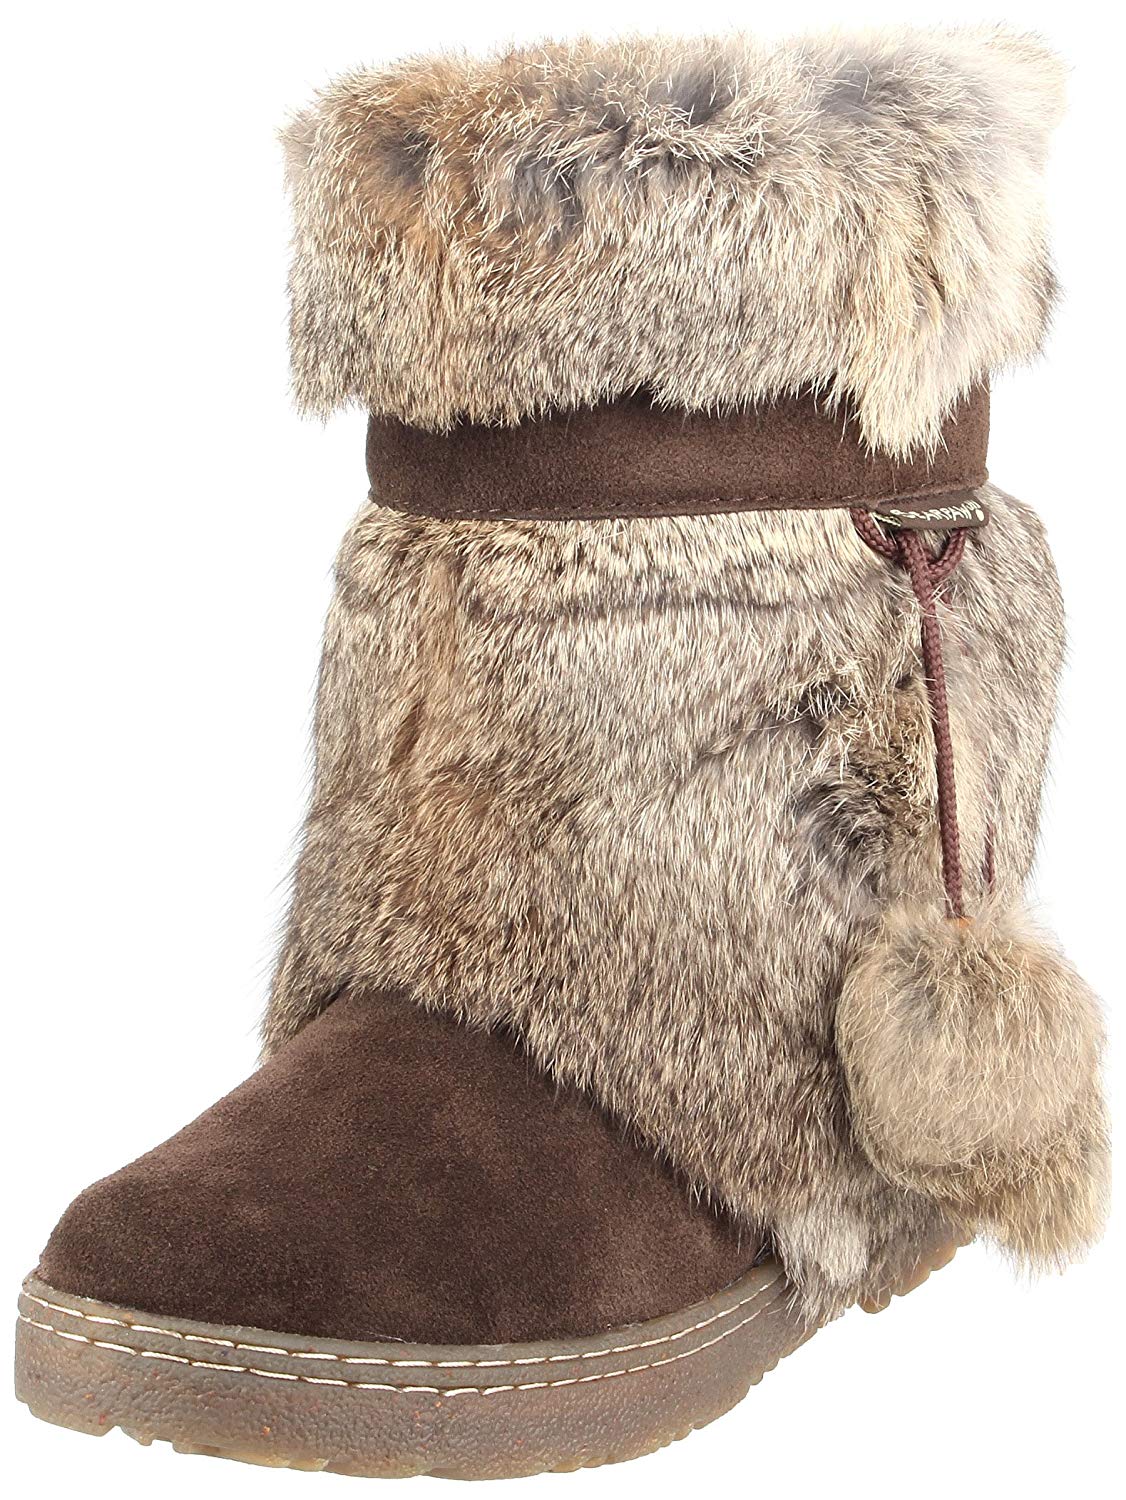 Bearpaw Women's Tama Rabbit Fur Boots, Chocolate, Size 8.0 | eBay